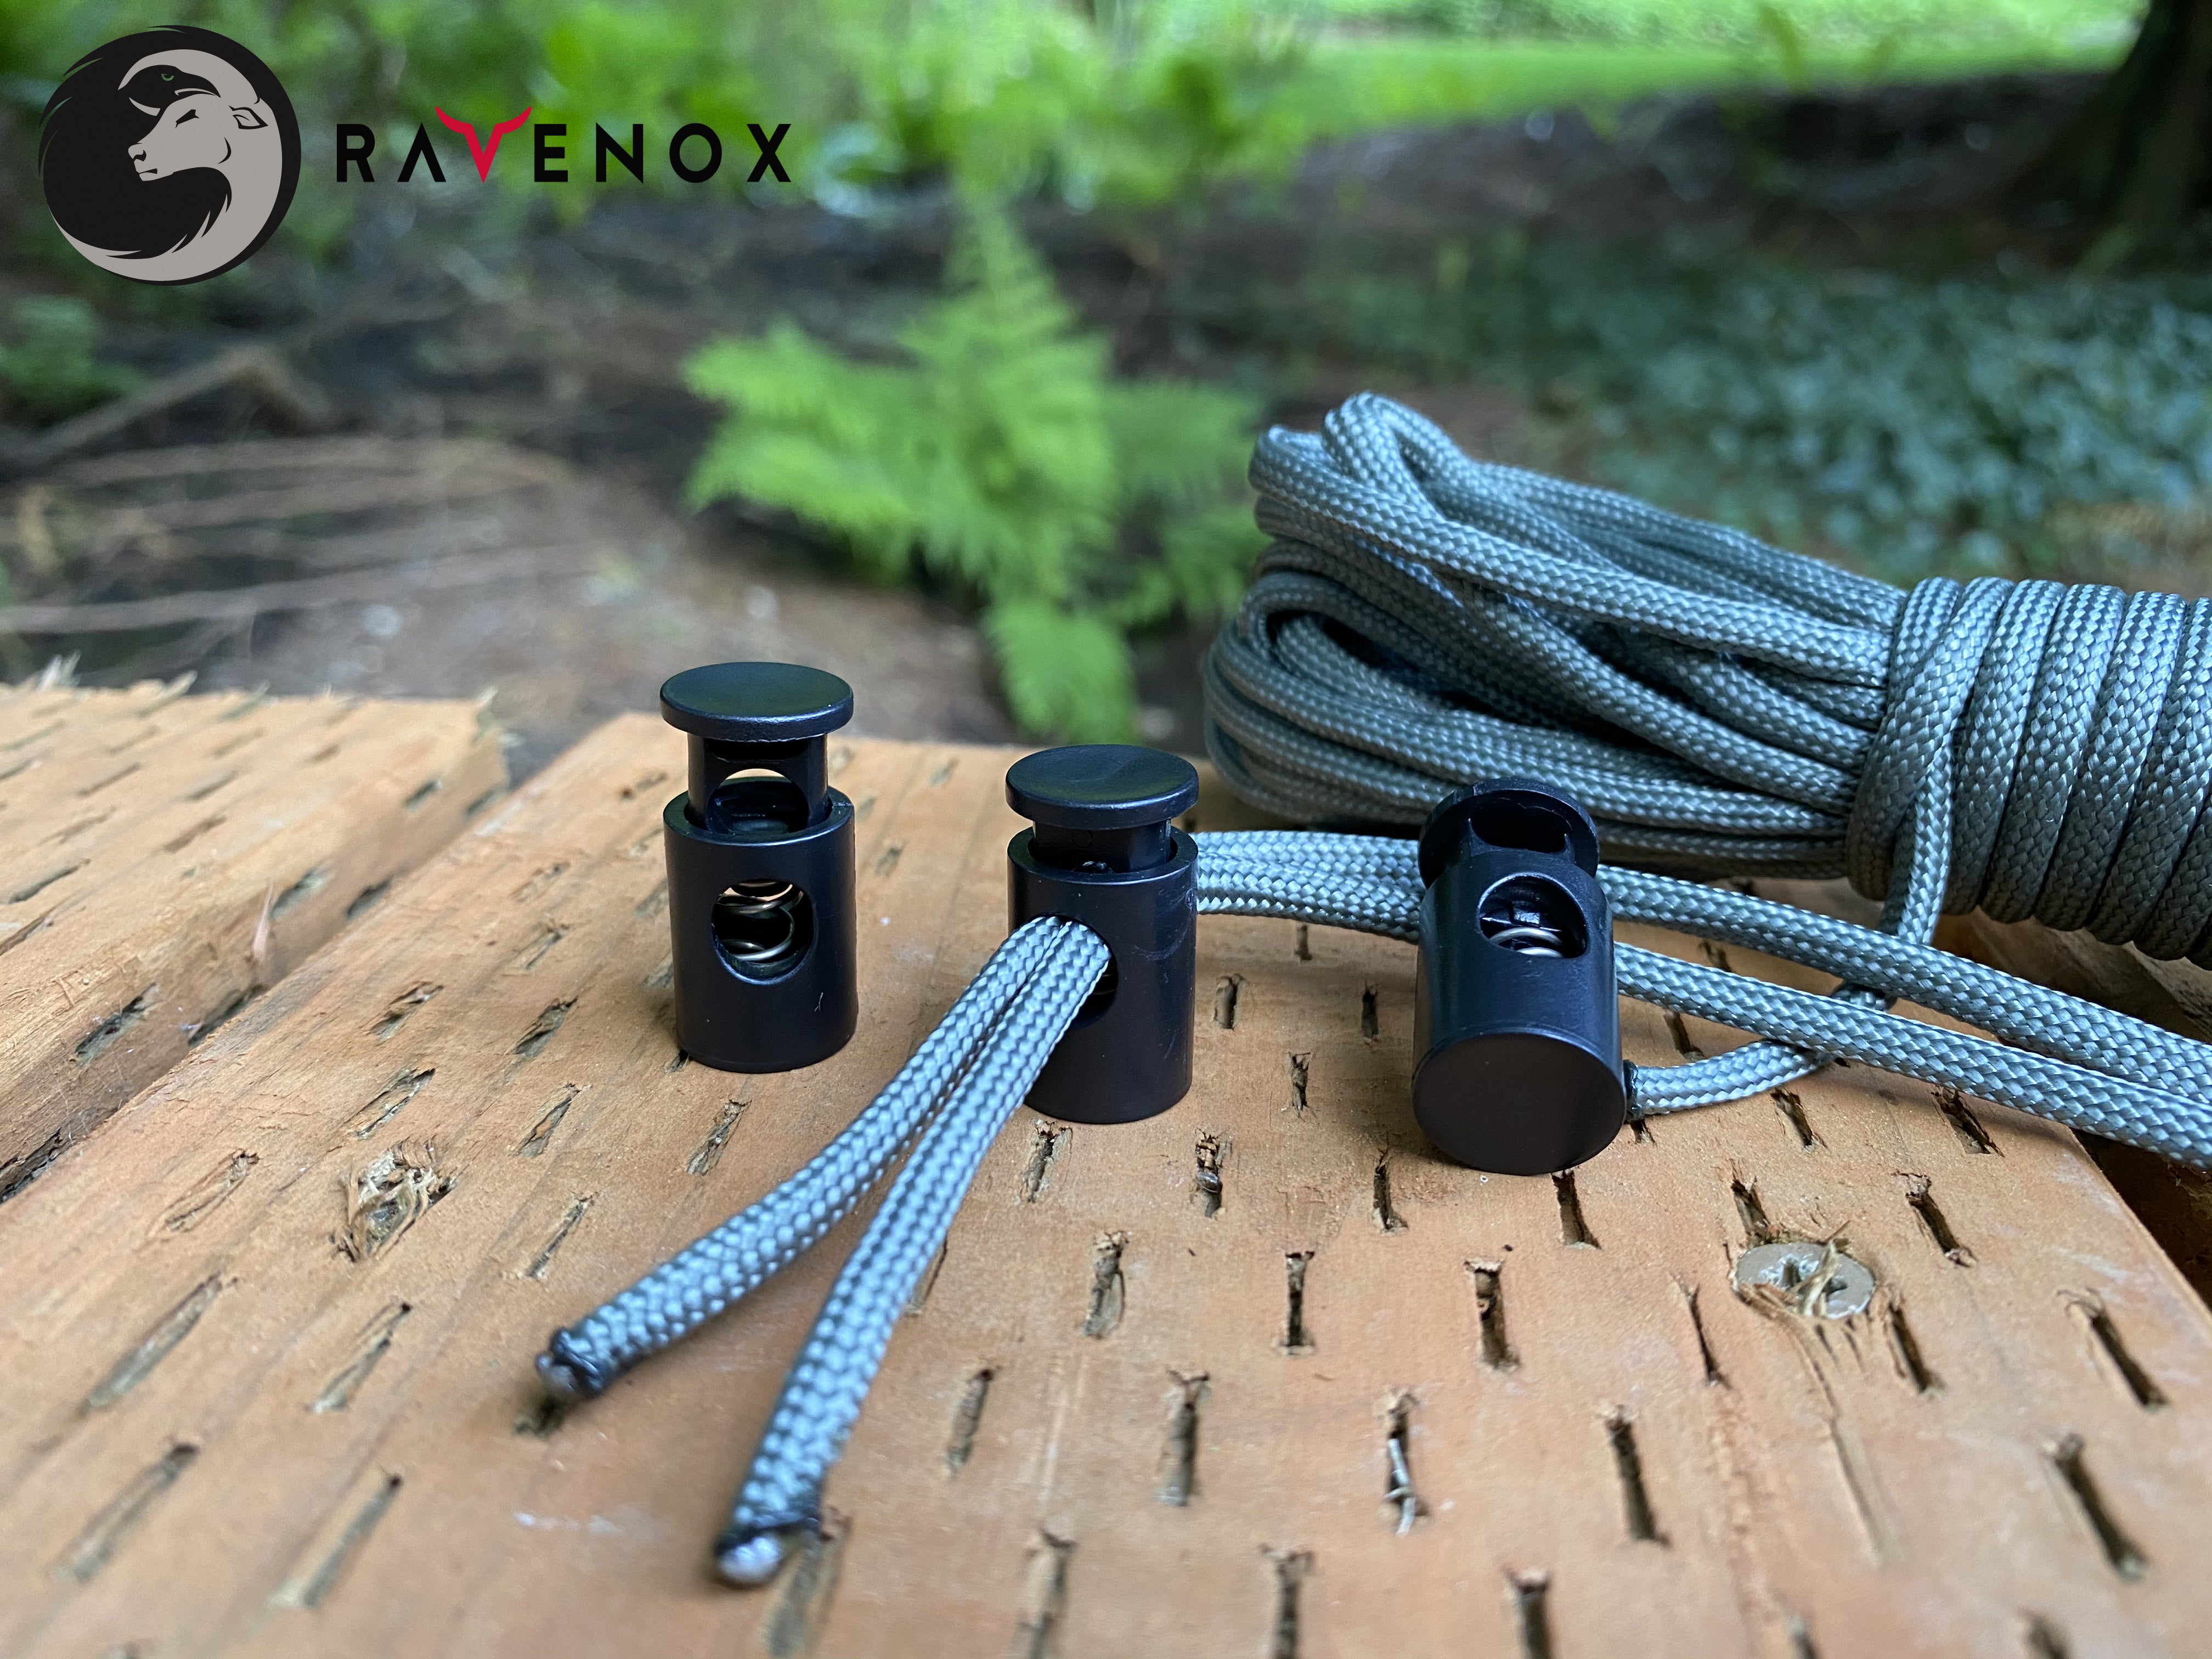 Ravenox White Primoloc Cord Lock | Toggle for Paracord Projects 6 Pack White